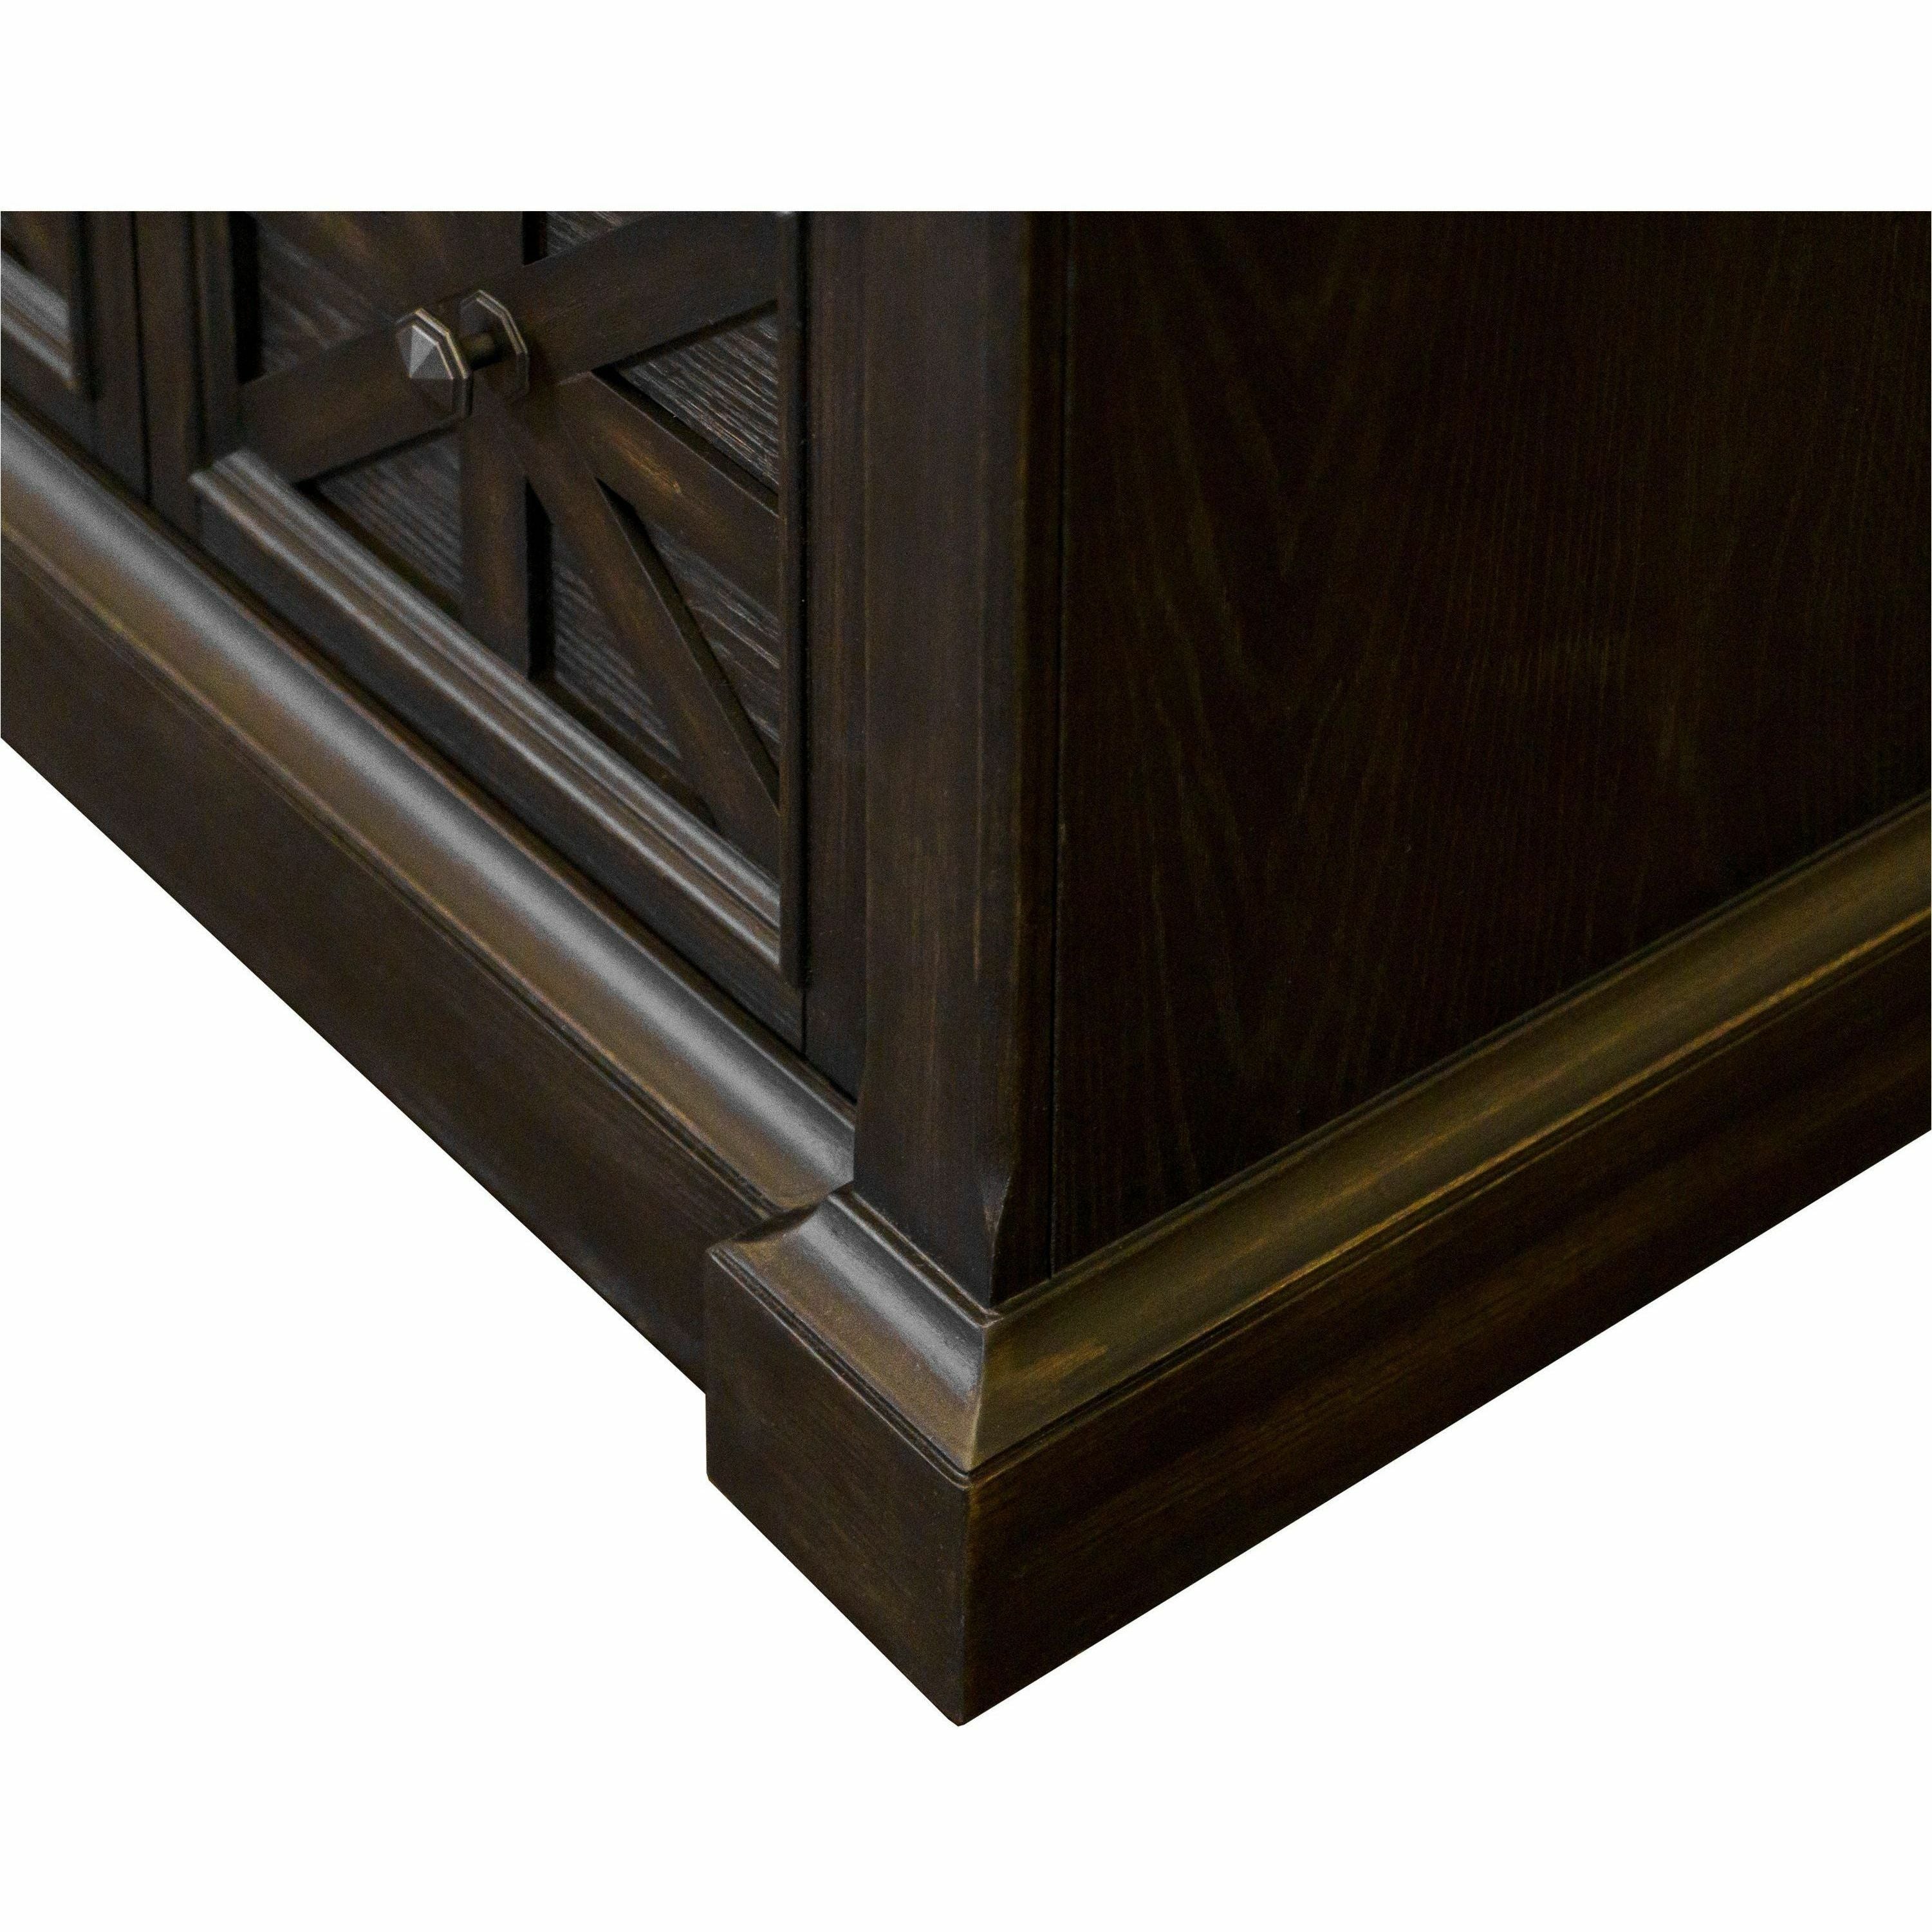 martin-kingston-office-desking-unit-36-x-2130-2-x-storage-drawers-material-wood-finish-dark-chocolate-rub-through_mrtimkn450 - 2